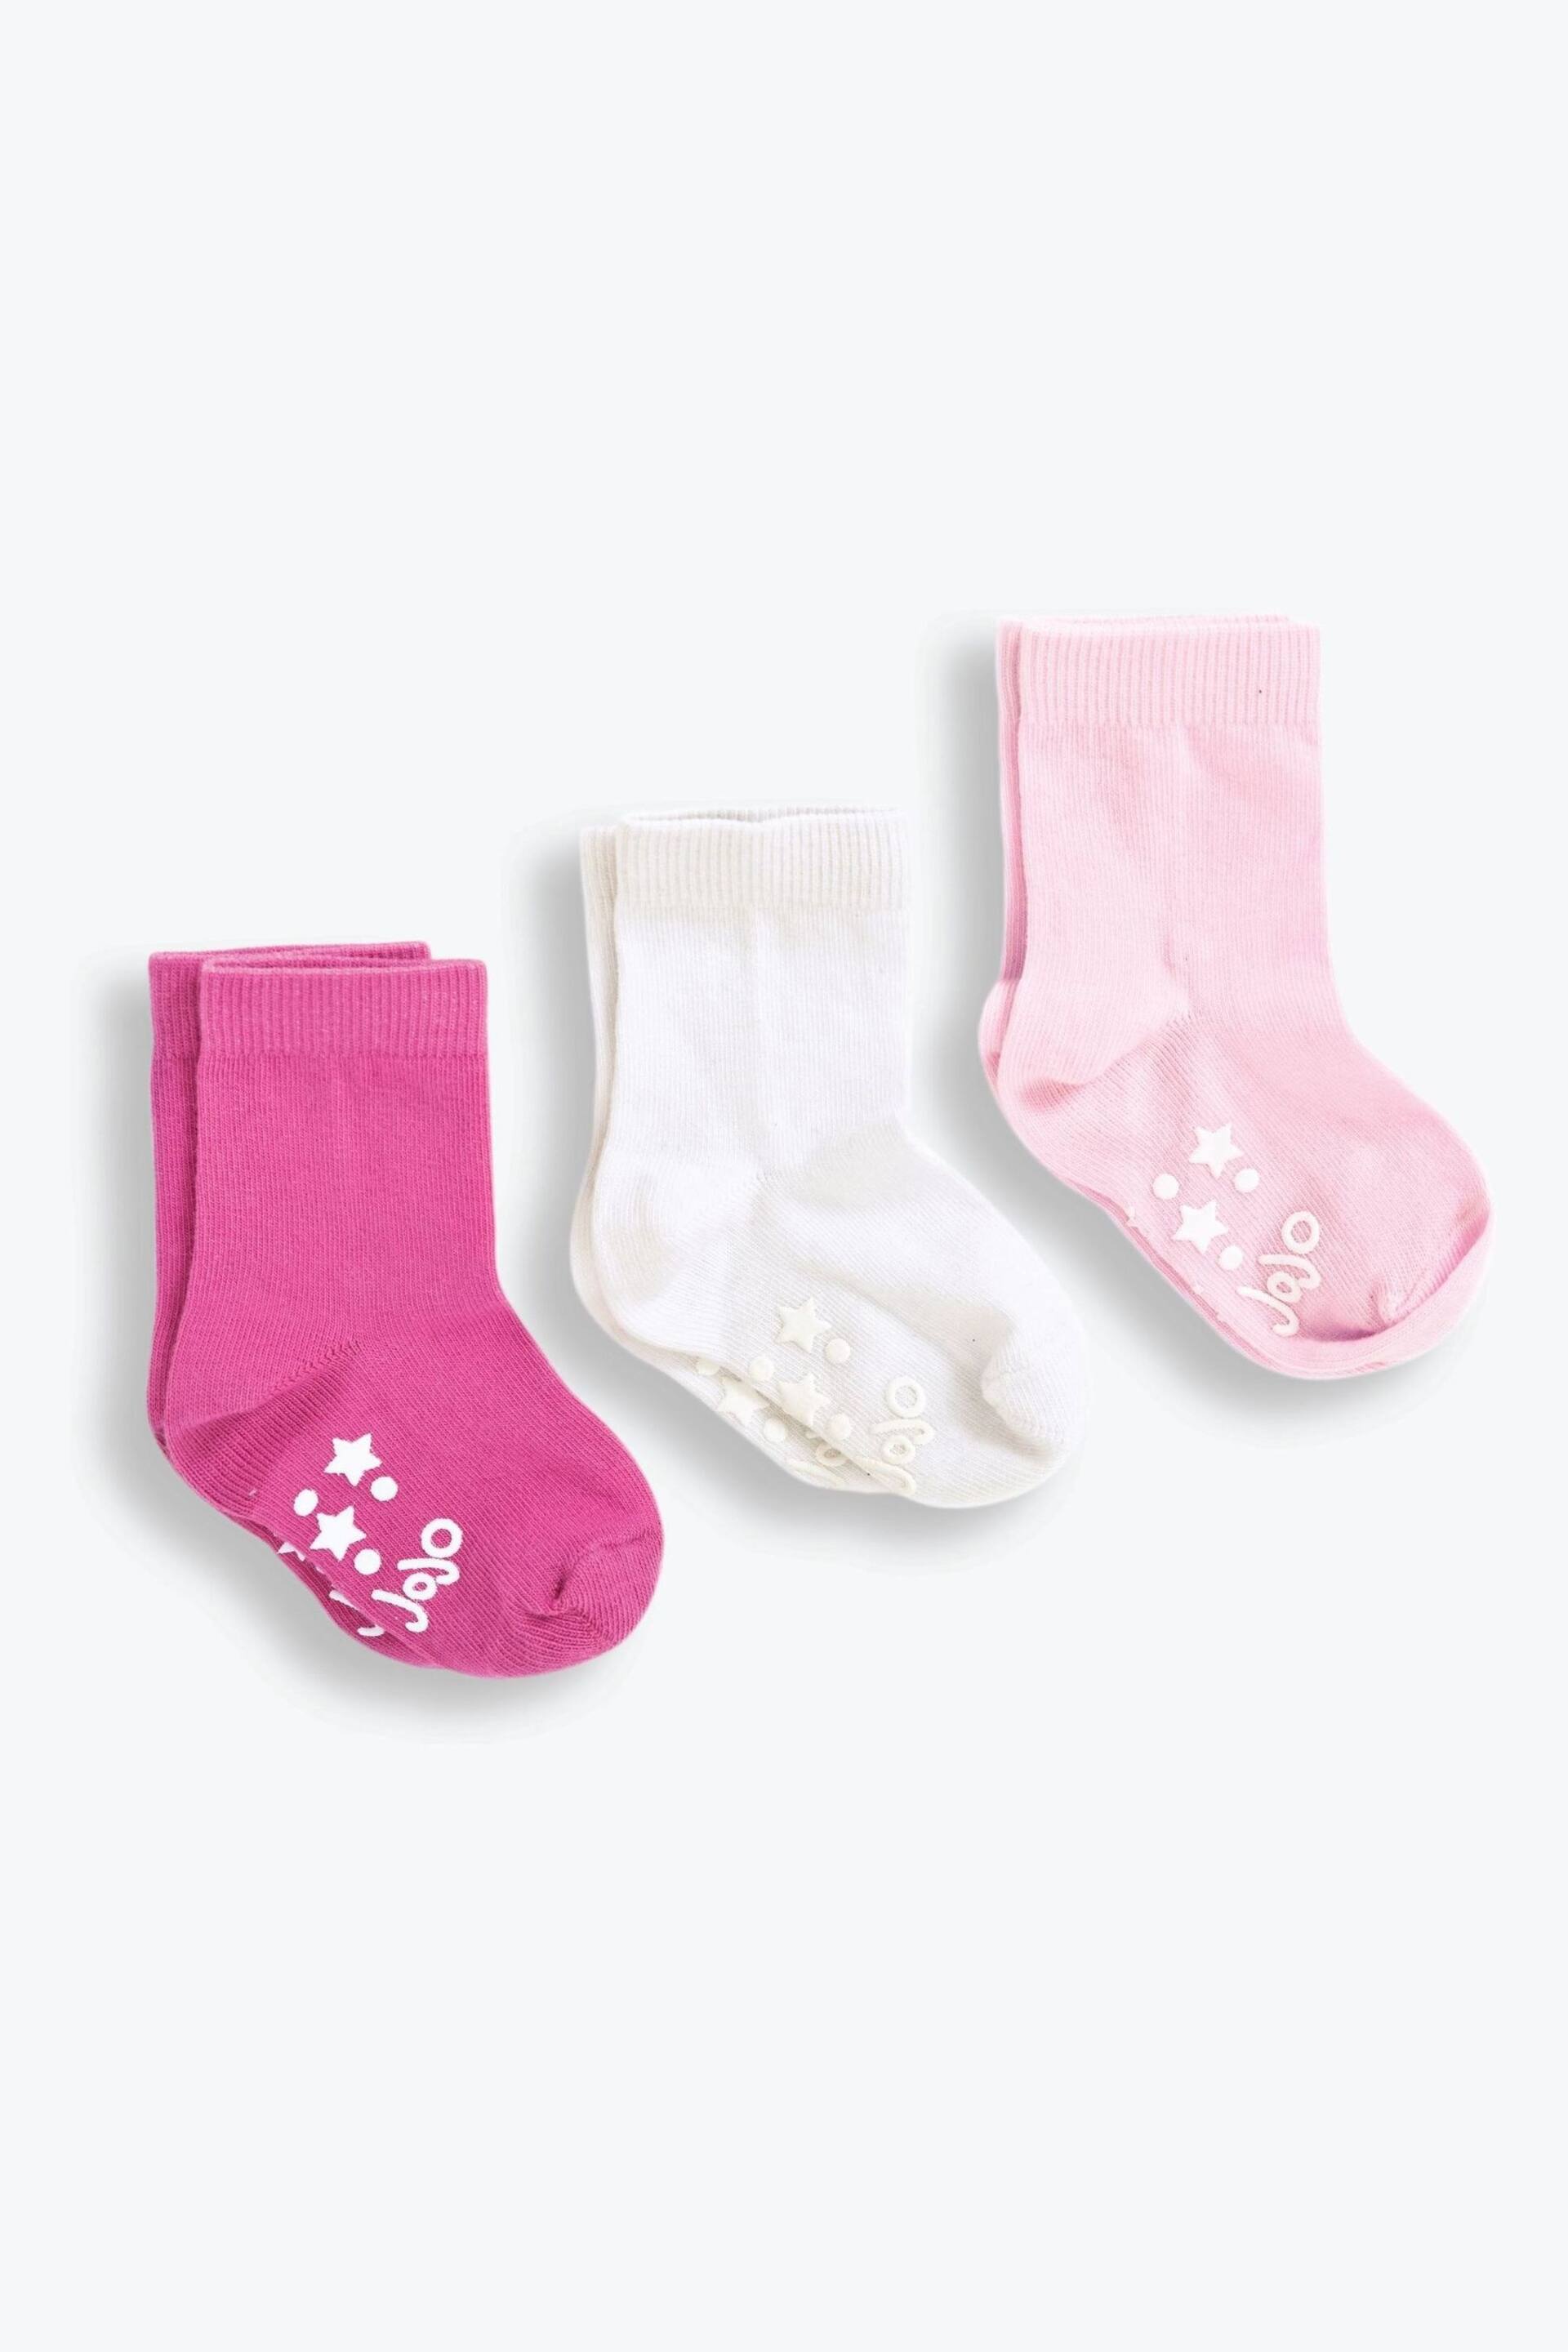 JoJo Maman Bébé Pink 3-Pack Short Cotton Socks - Image 1 of 1